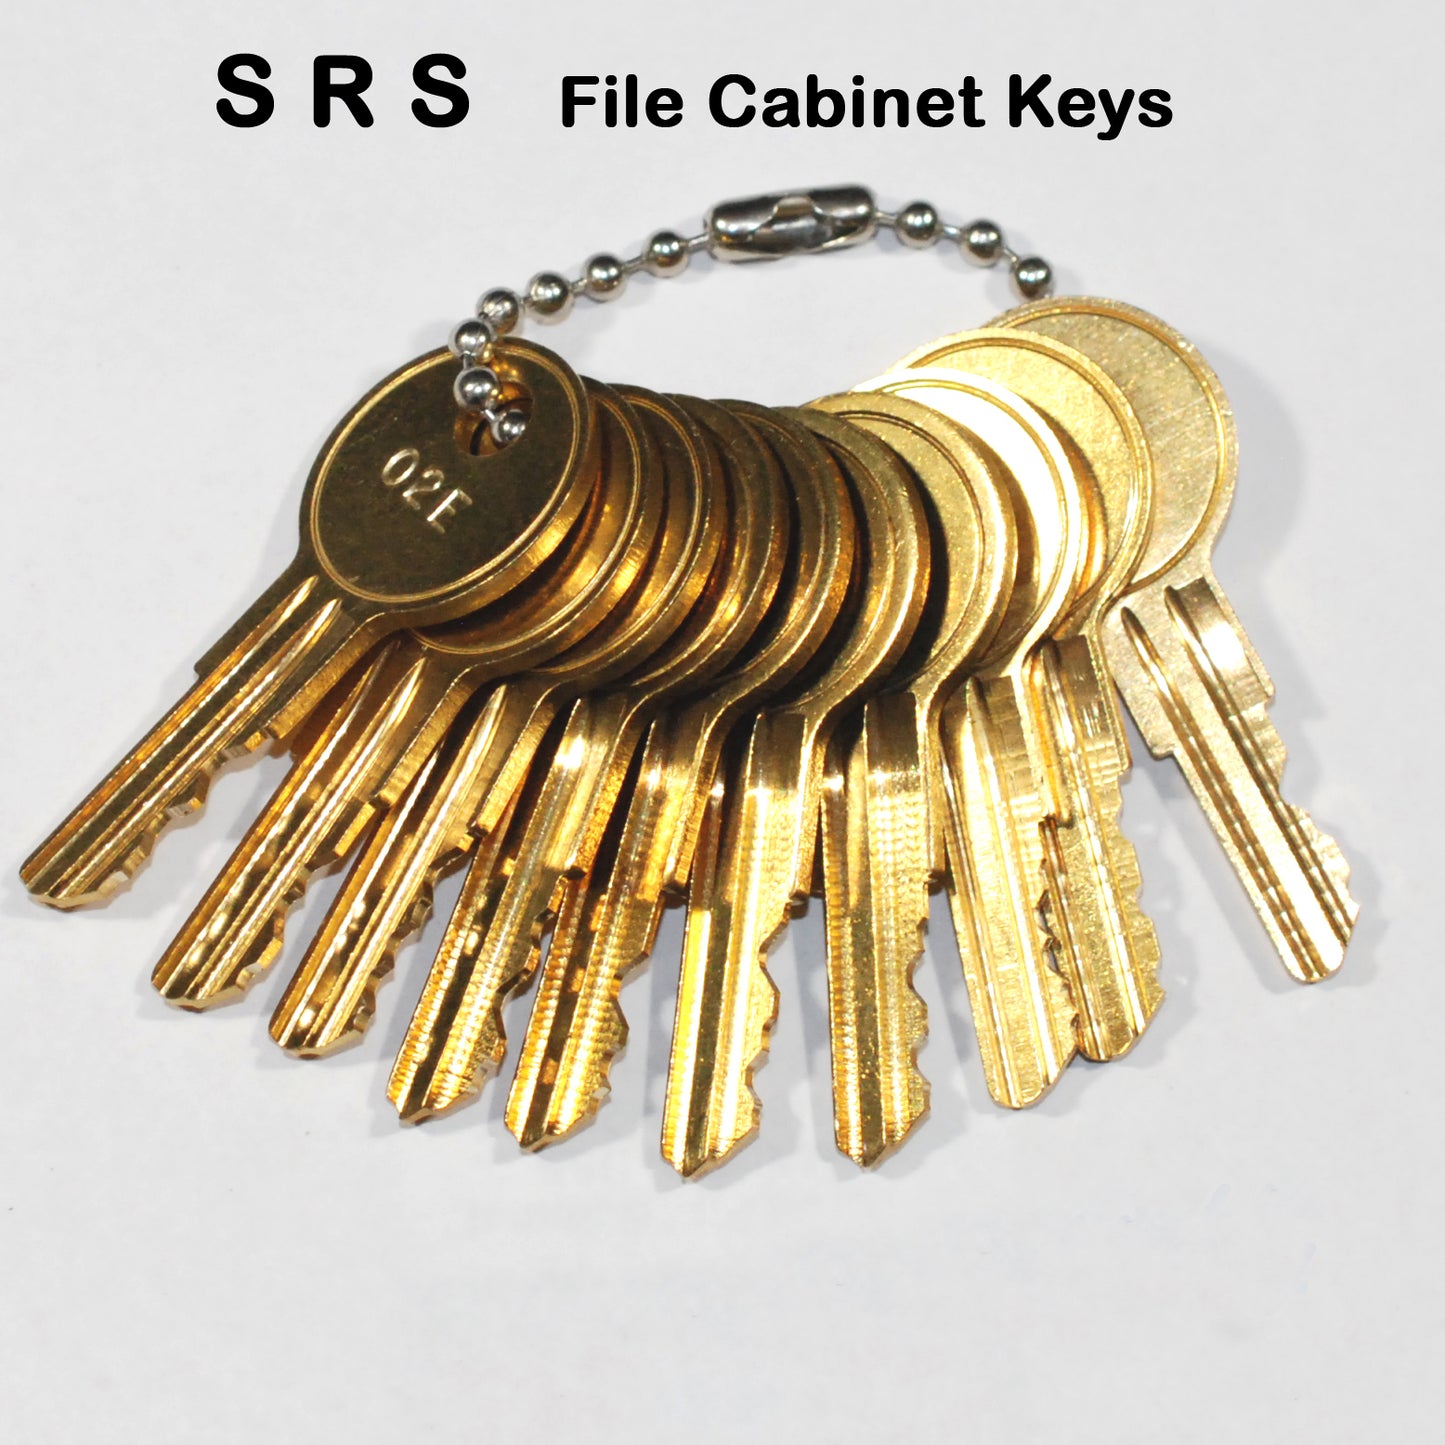 10 SRS Pentesting Key Set ~ SRS File Cabinet 01E 02E 03E 04E 05E 06E 07E 08E 09E 10E